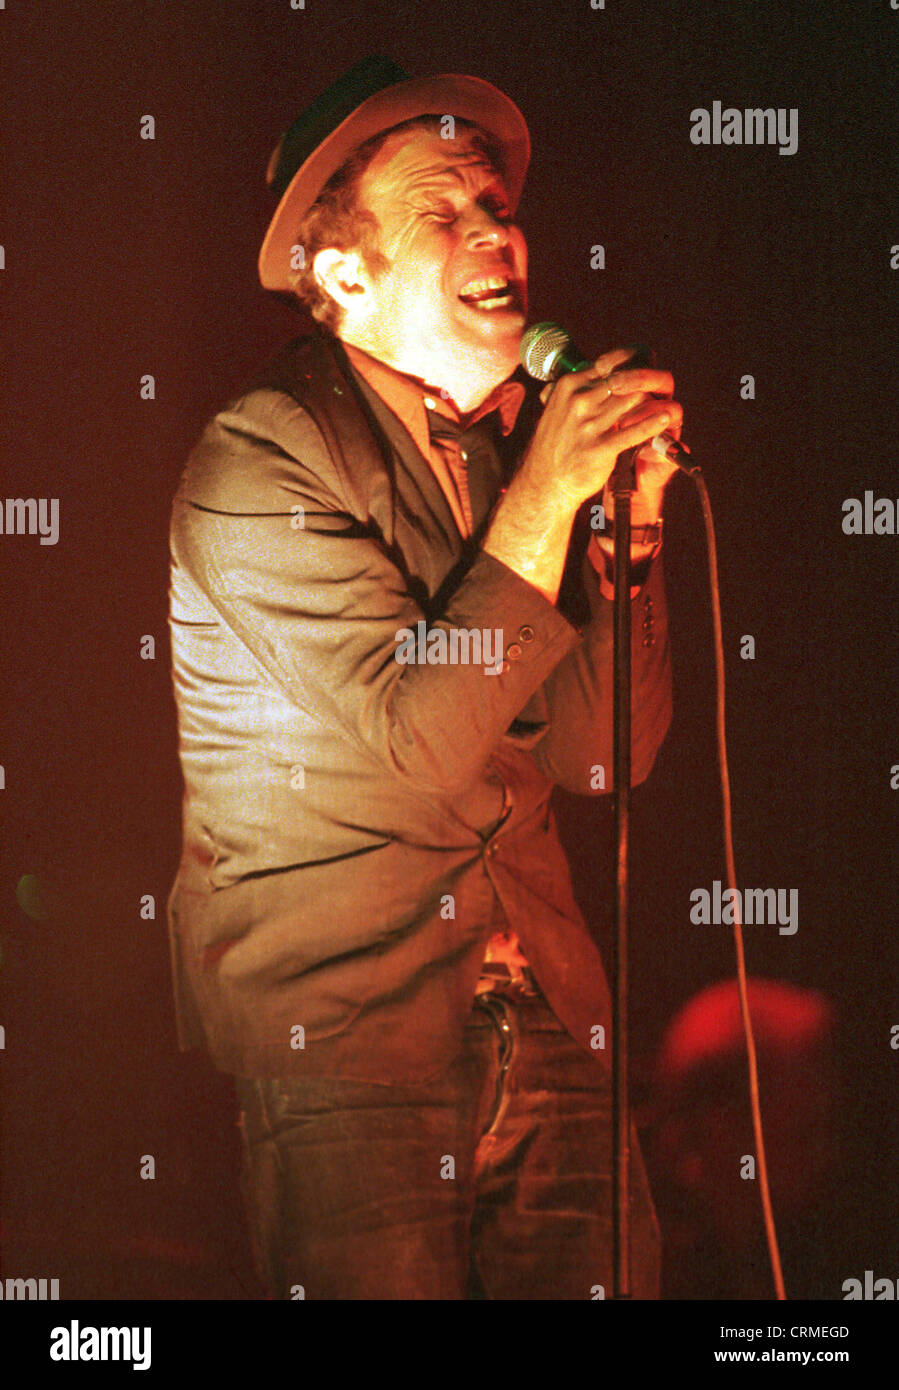 Tom Waits in concert in Berlin Stock Photo - Alamy